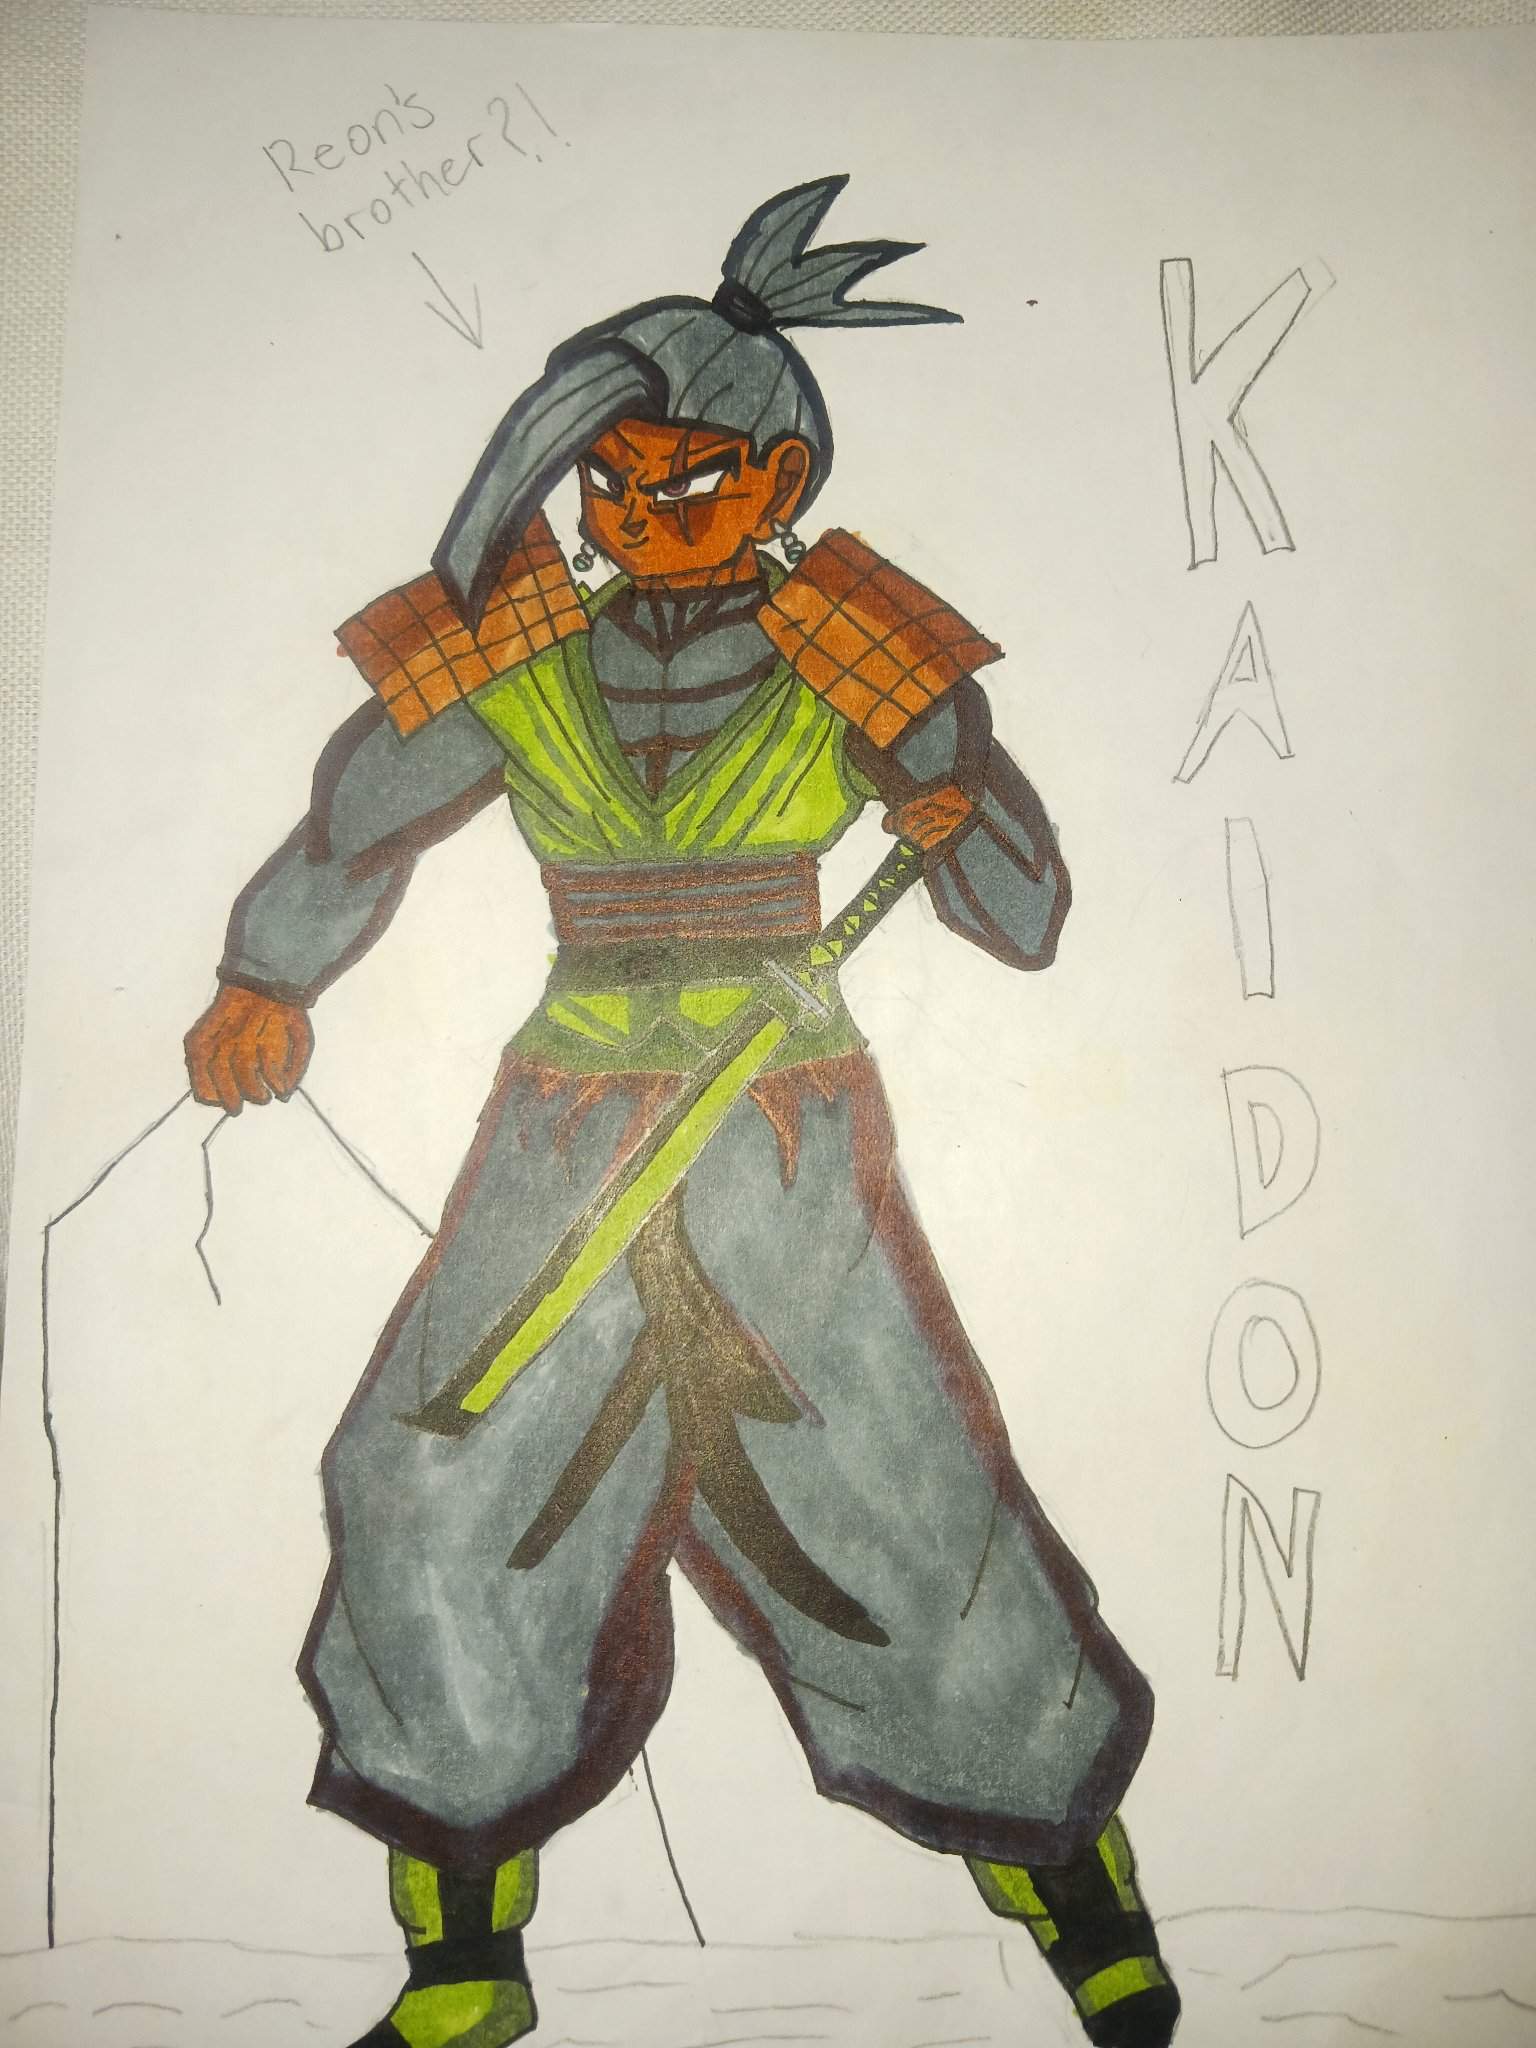 Introducing New Character Reon S Older Brother Kaidon DragonBallZ